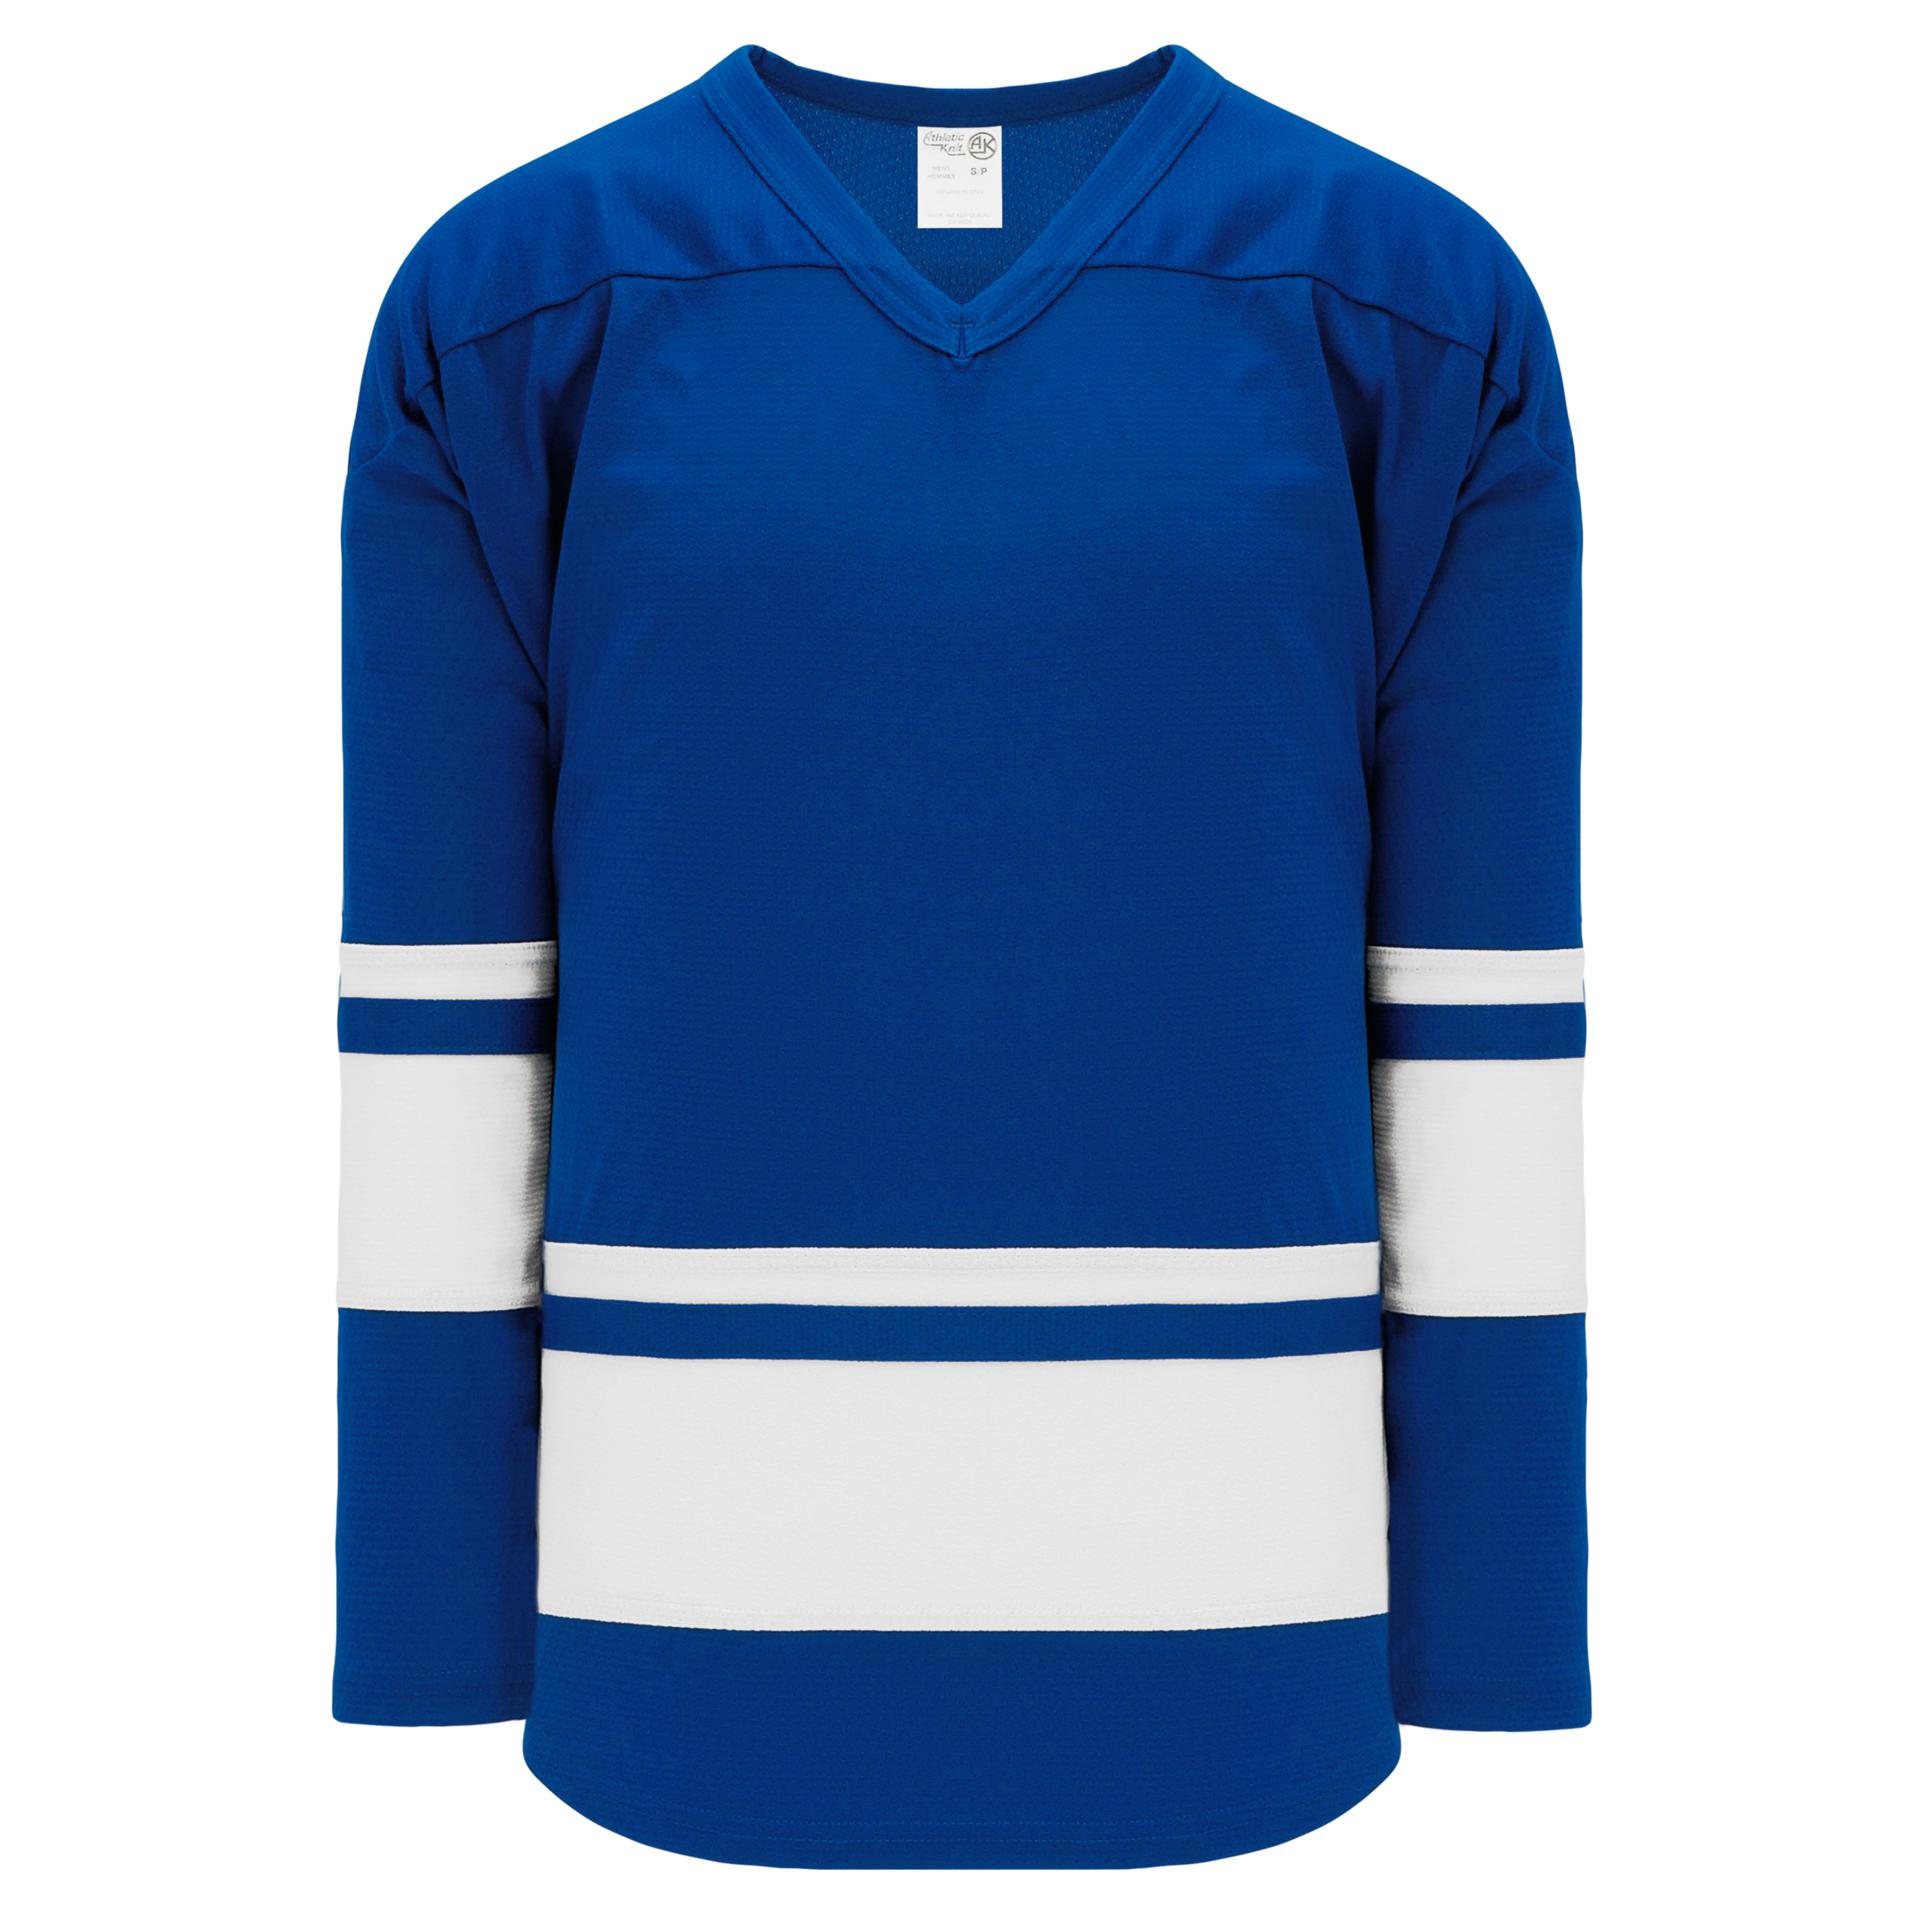 NWT NHL Merchandise Columbus Blue Jackets Poly Shirt Youth Medium 10/12